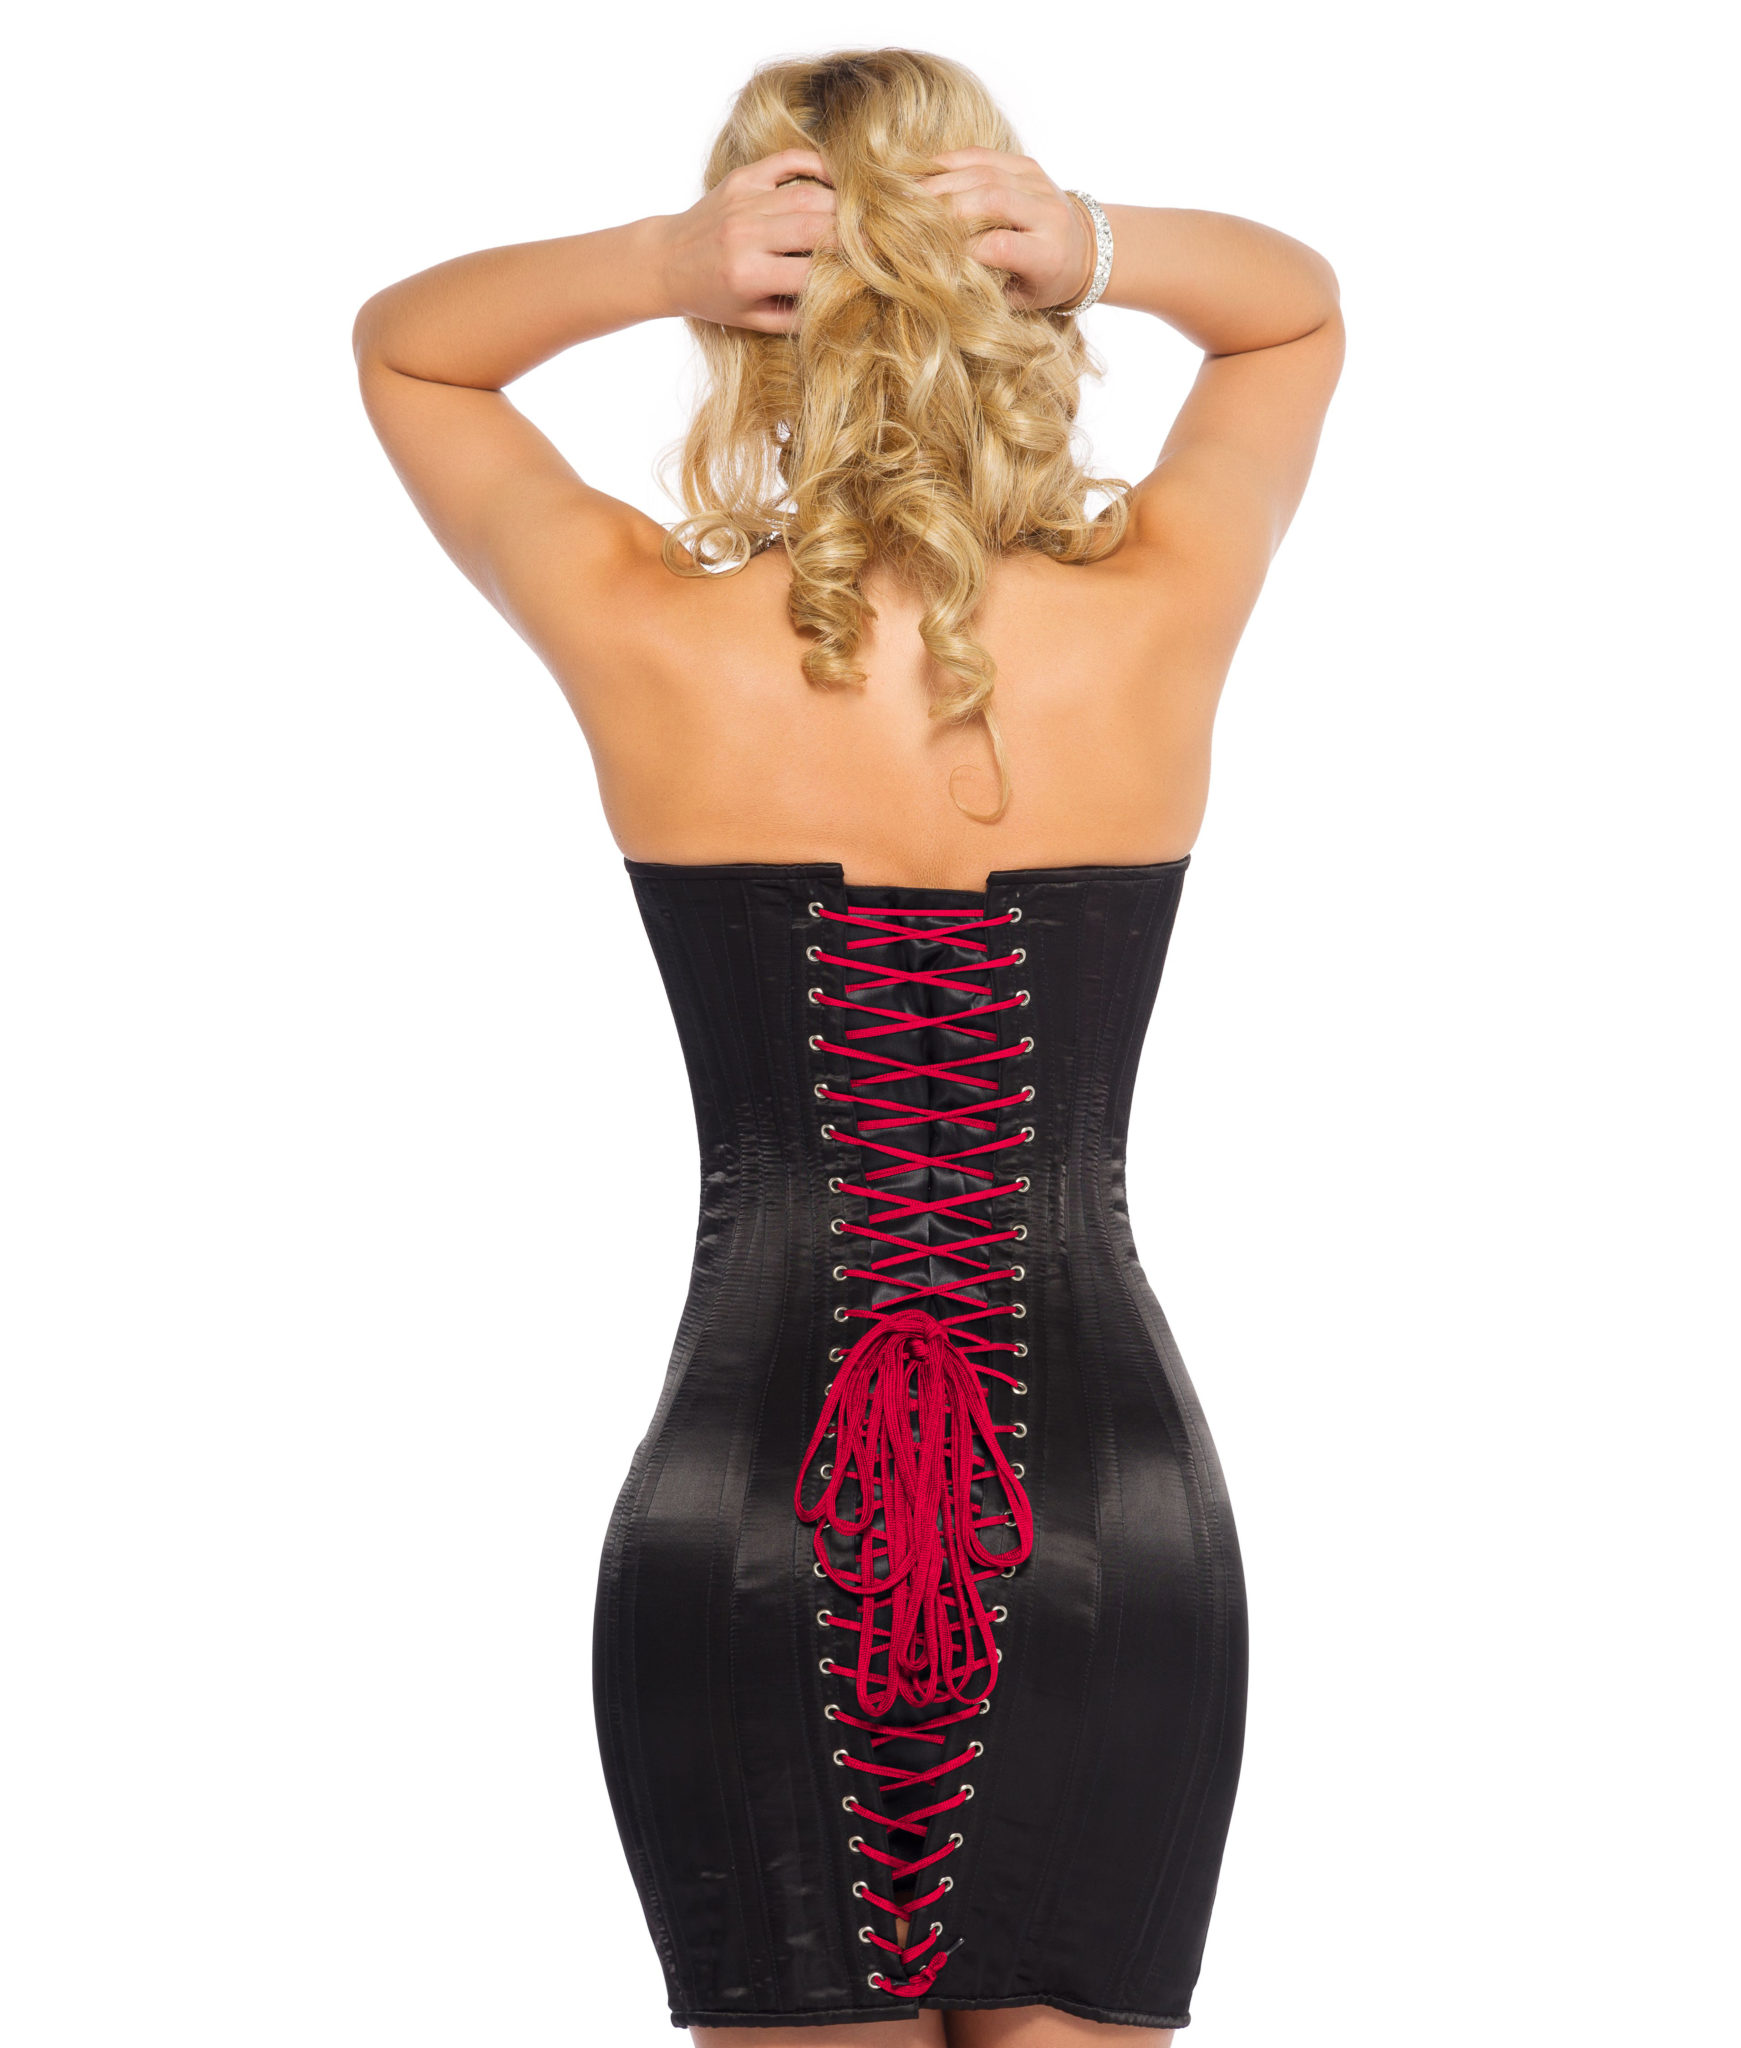 https://glamorouscorset.com/wp-content/uploads/2020/07/hot-pink-corset-laces-scaled.jpg